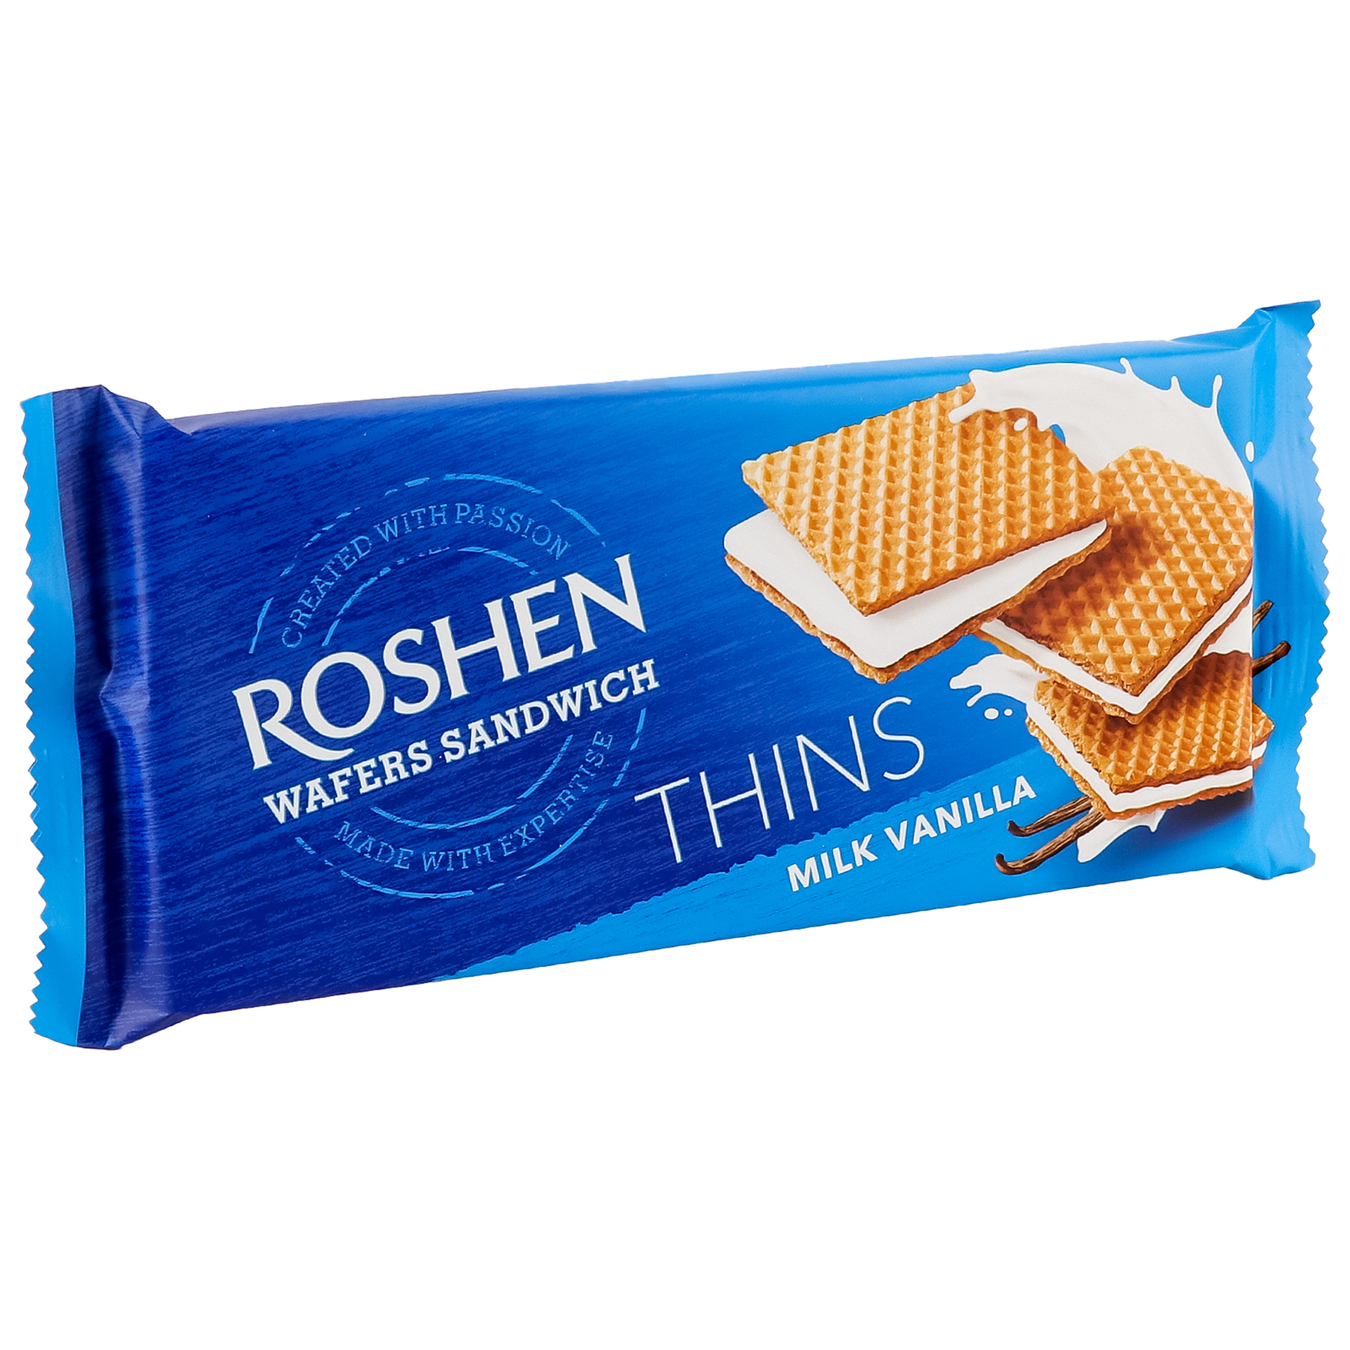 Waffles Roshen wafers sandwich thins milk-vanilla Roshen 50g 2